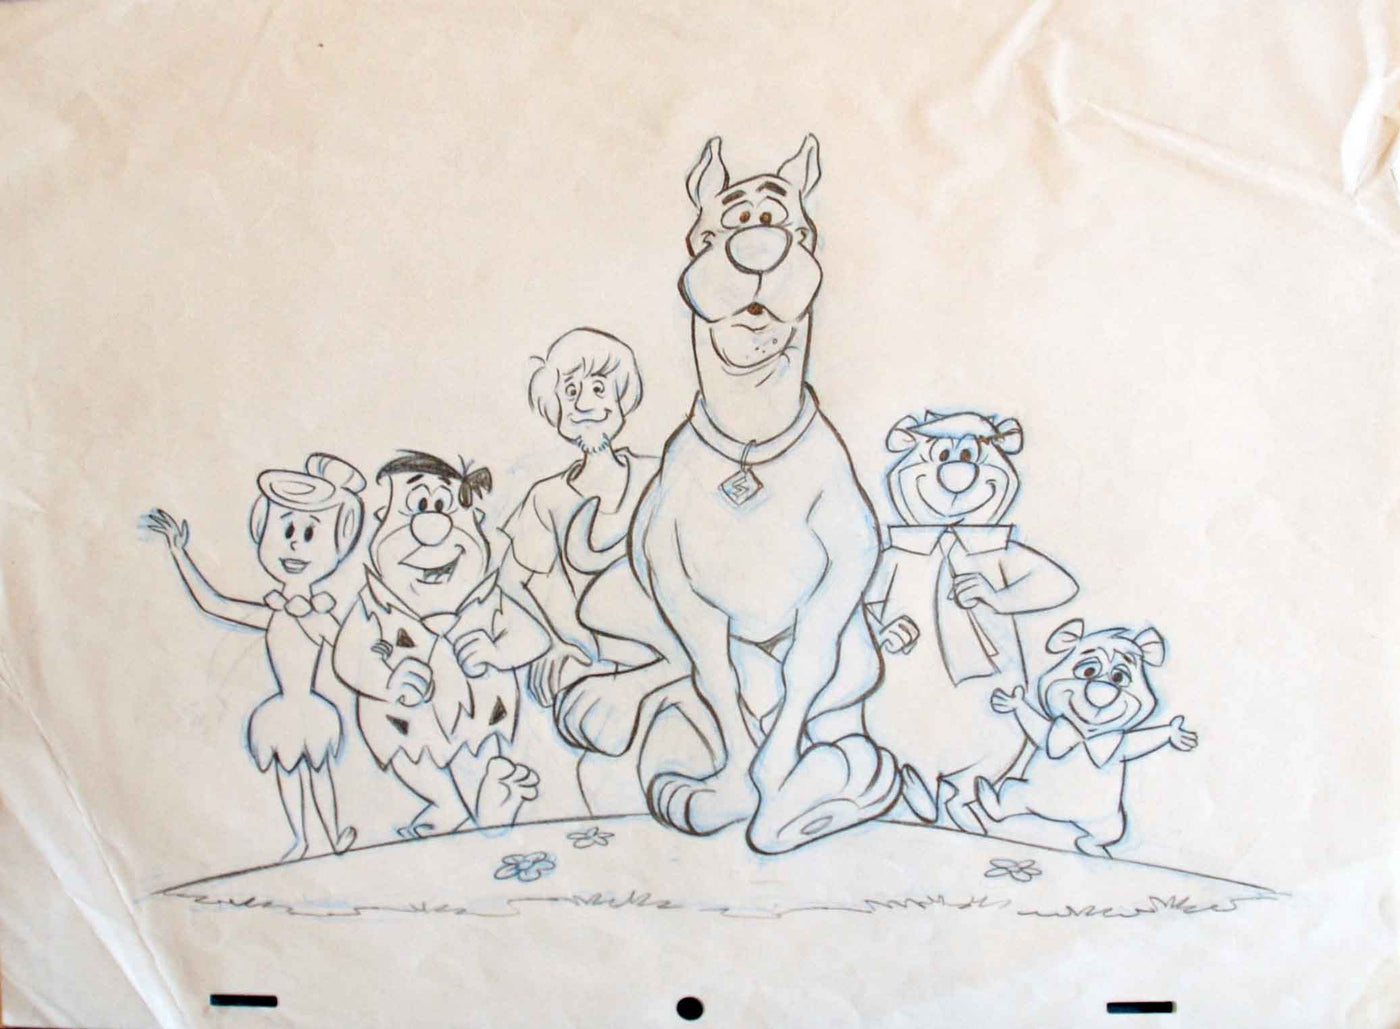 Hanna Barbera Drawing featuring Wilma and Fred Flintstone, Shaggy, Scooby Doo, Yogi and Boo-Boo Bear